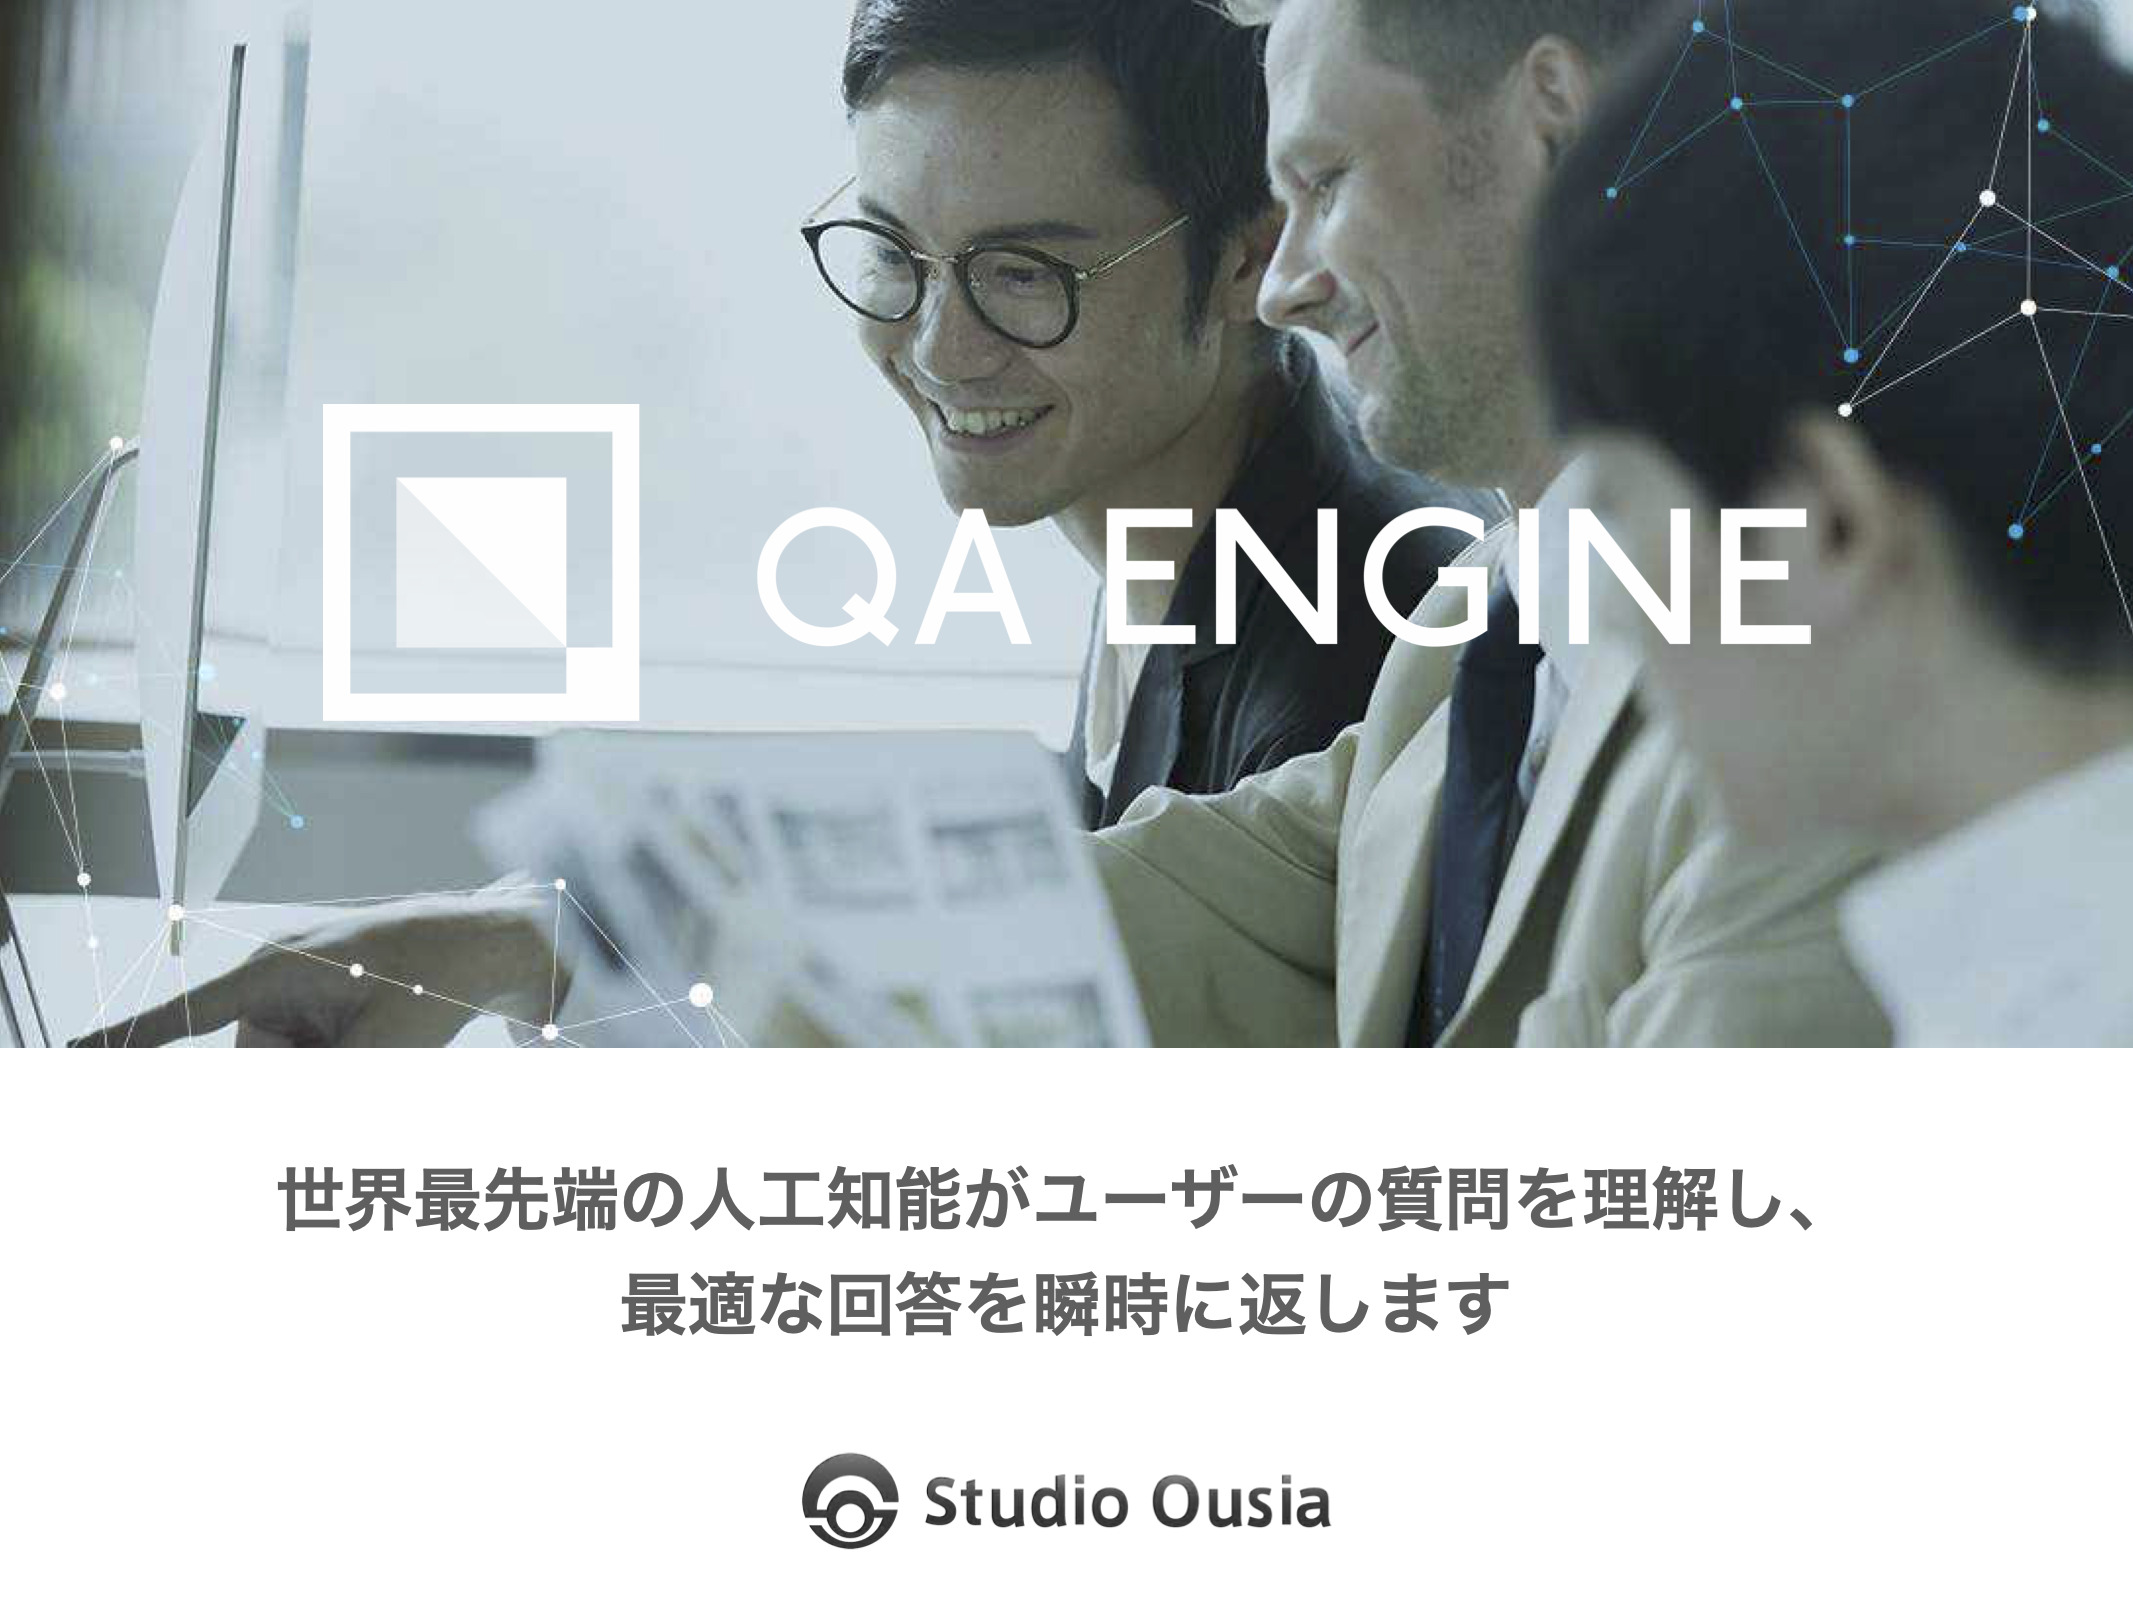 qa_engine